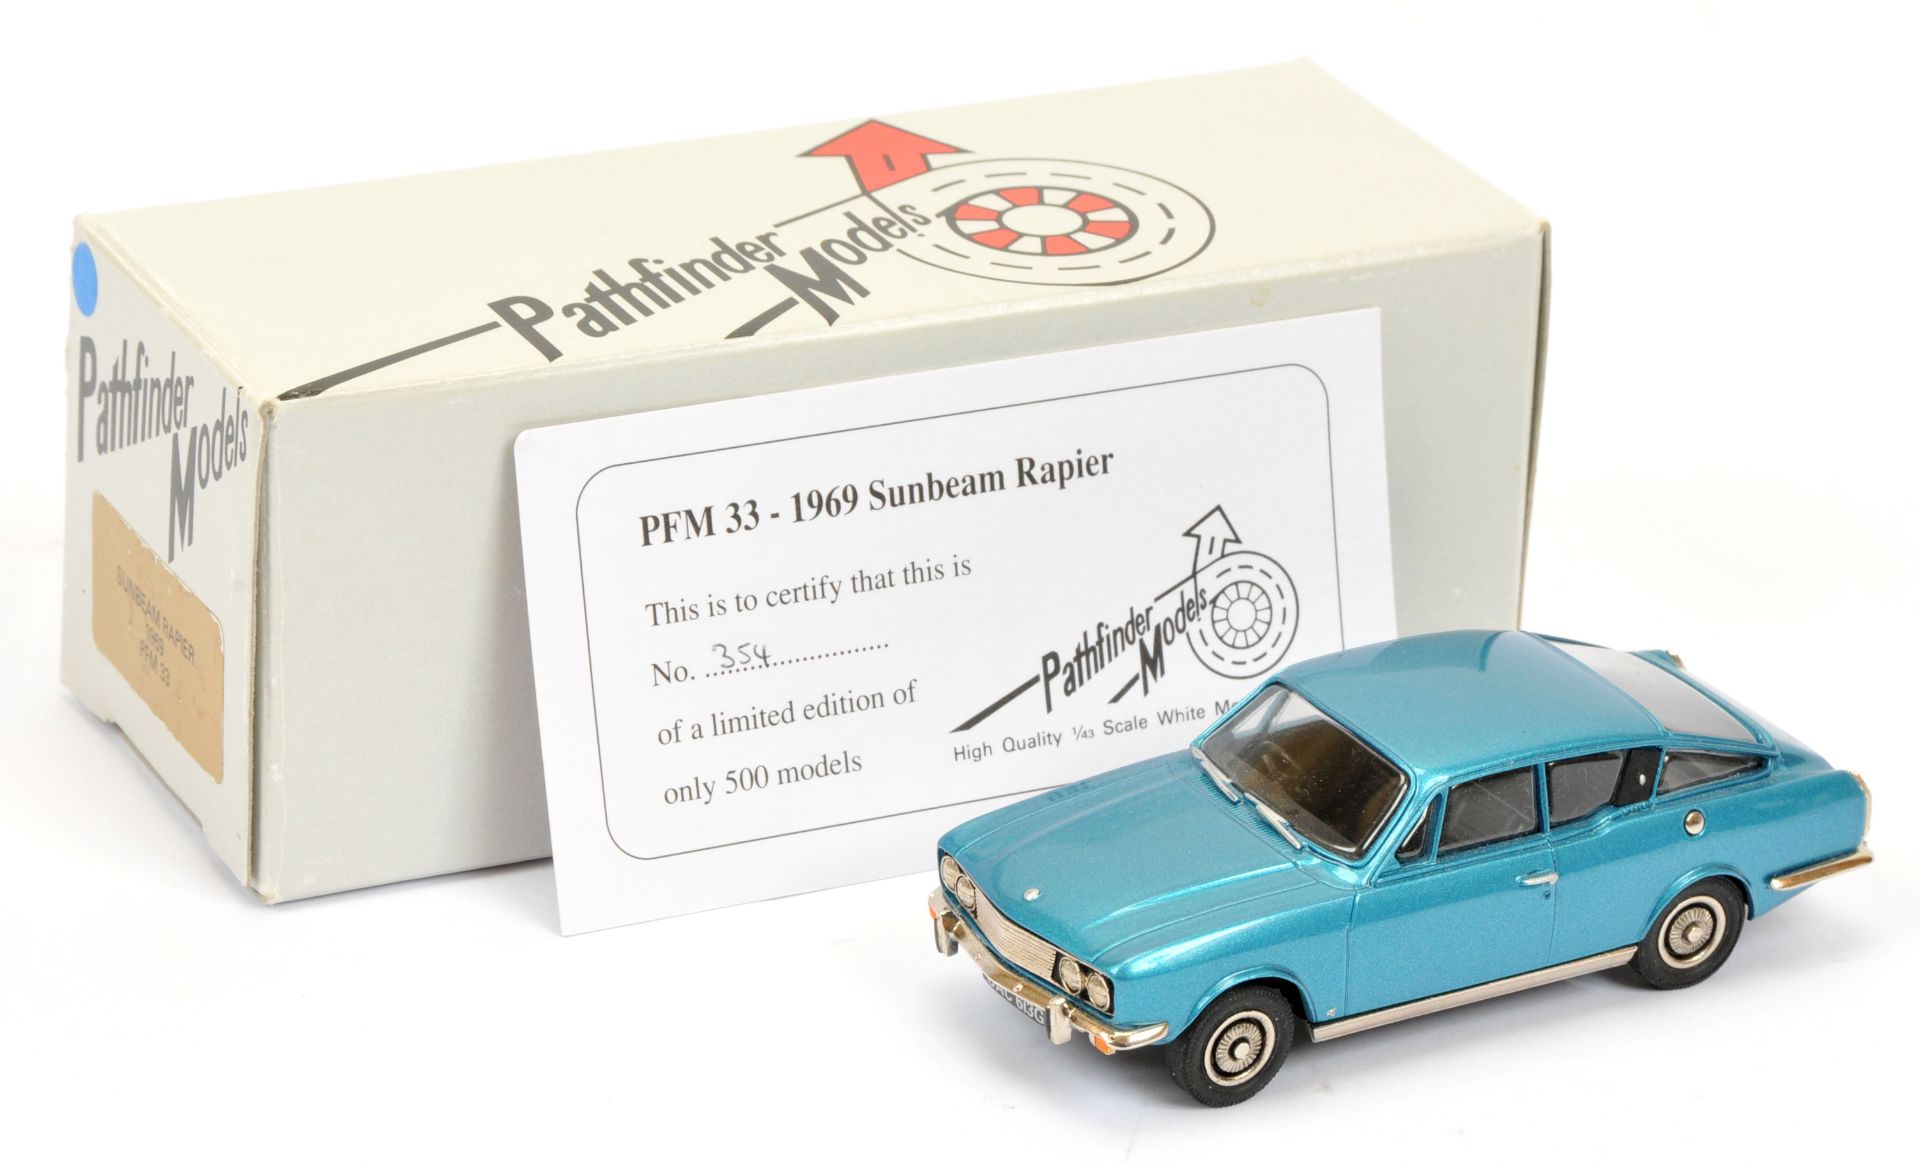 Pathfinder Models PFM33 Sunbeam Rapier 1969 